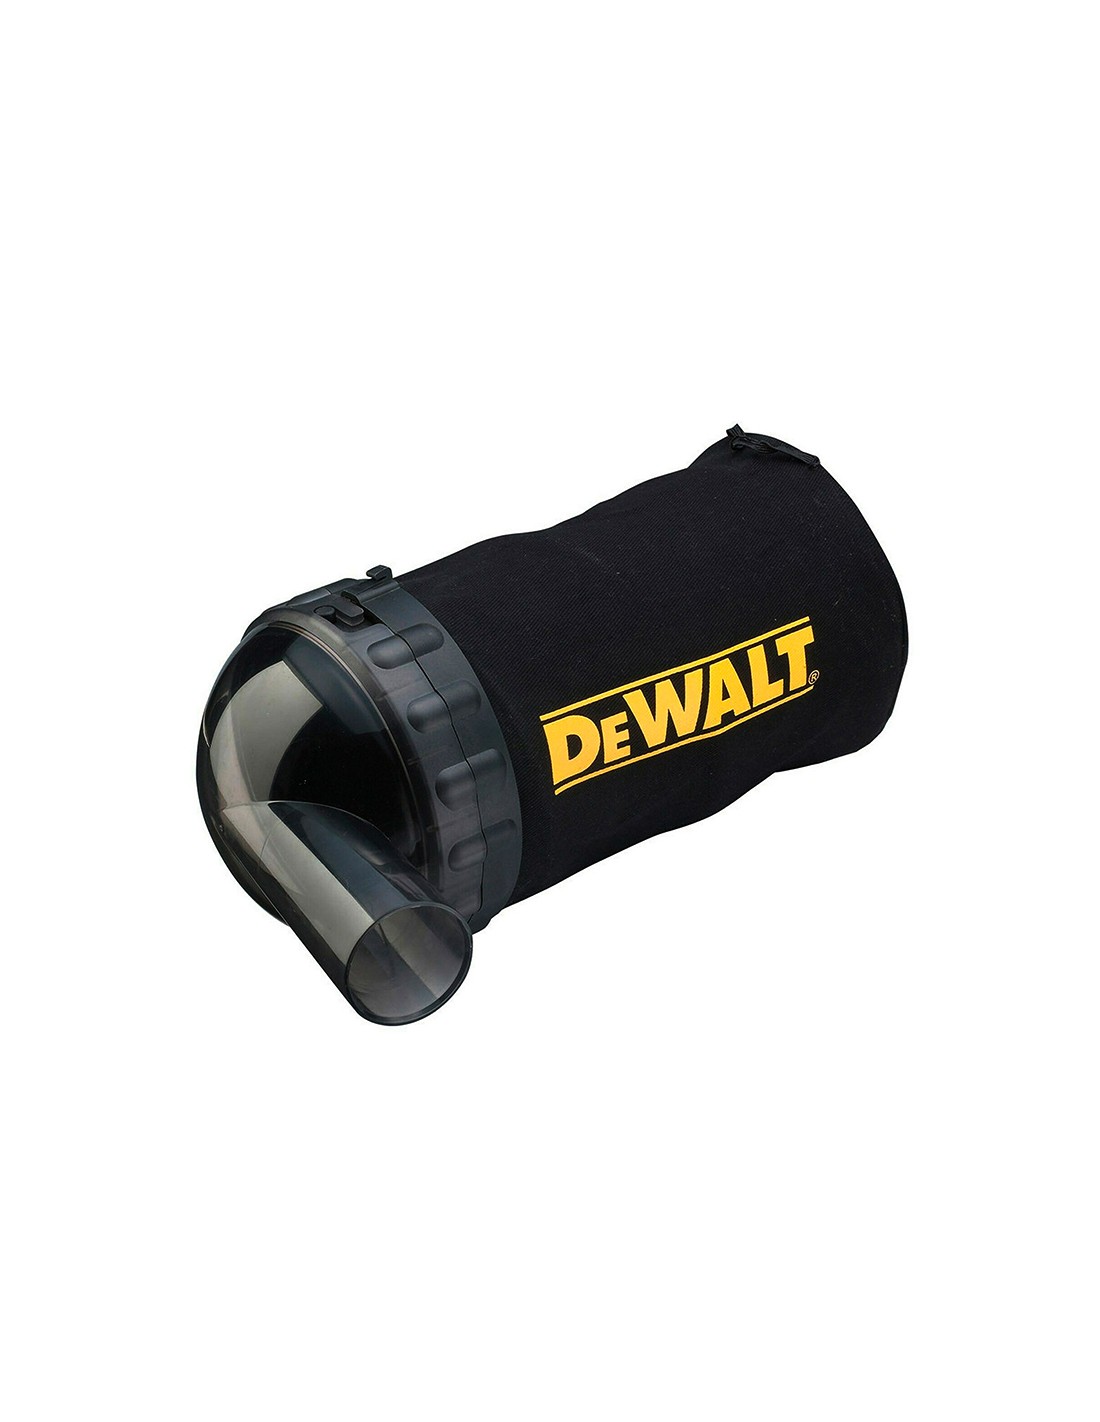 DeWalt DWV9390 Dust Bag for Cordless Planer DCP580 